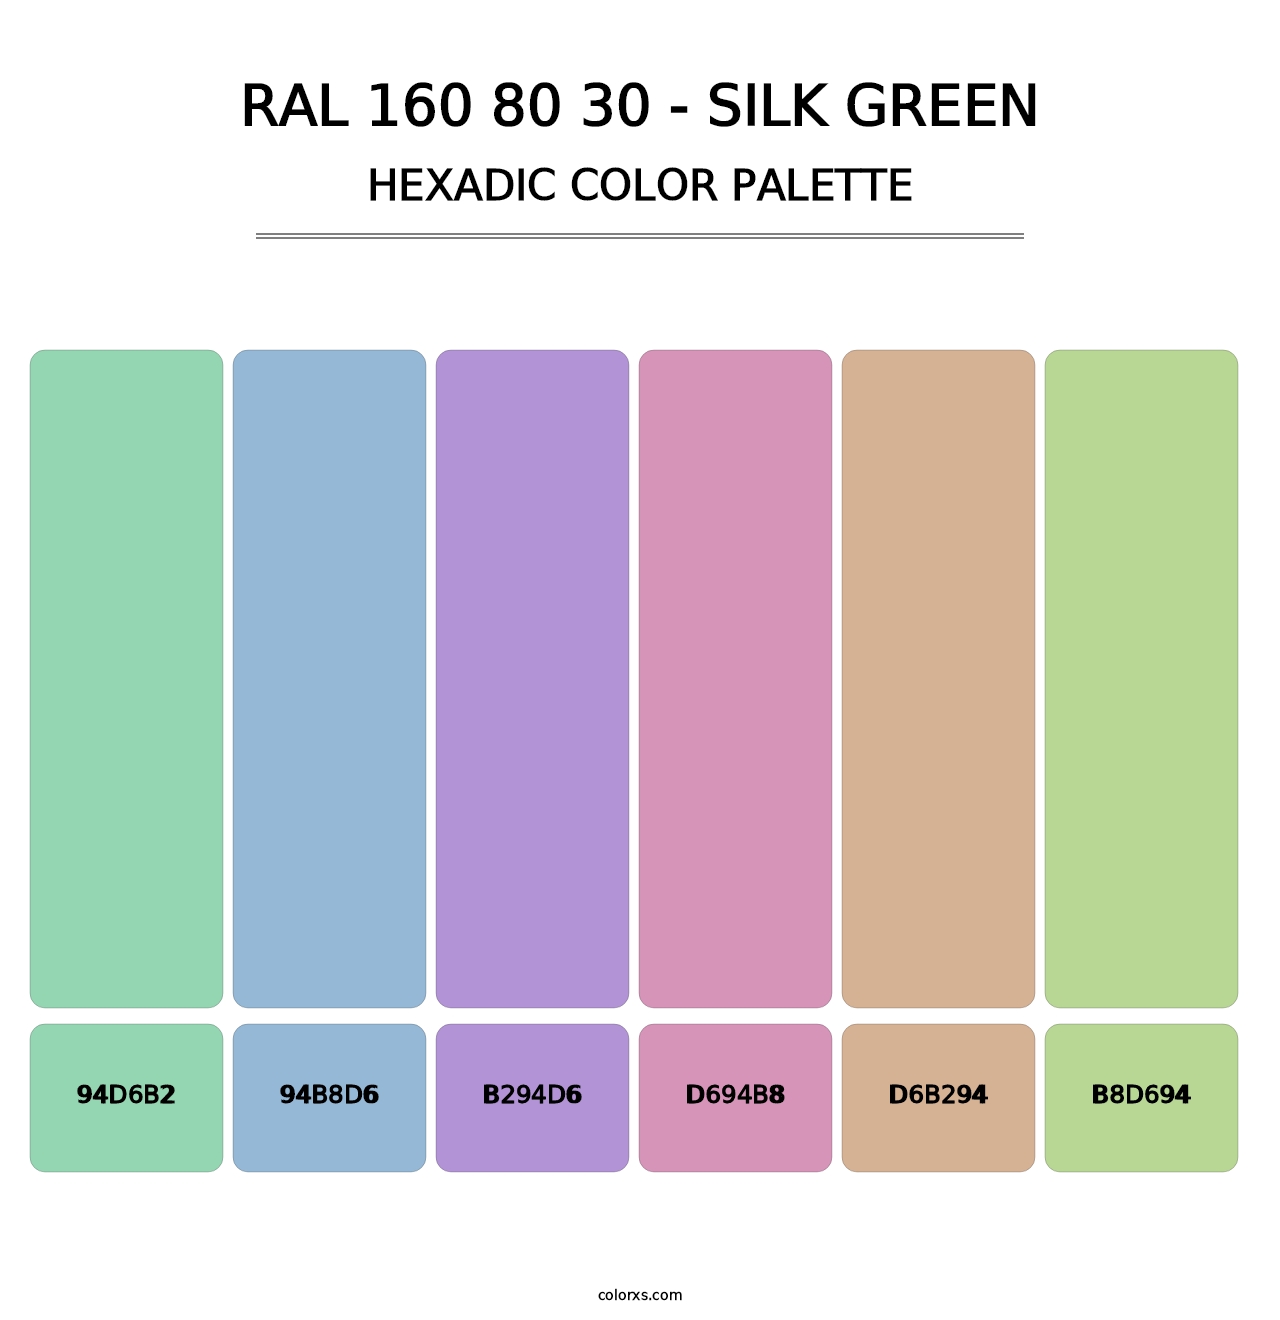 RAL 160 80 30 - Silk Green - Hexadic Color Palette